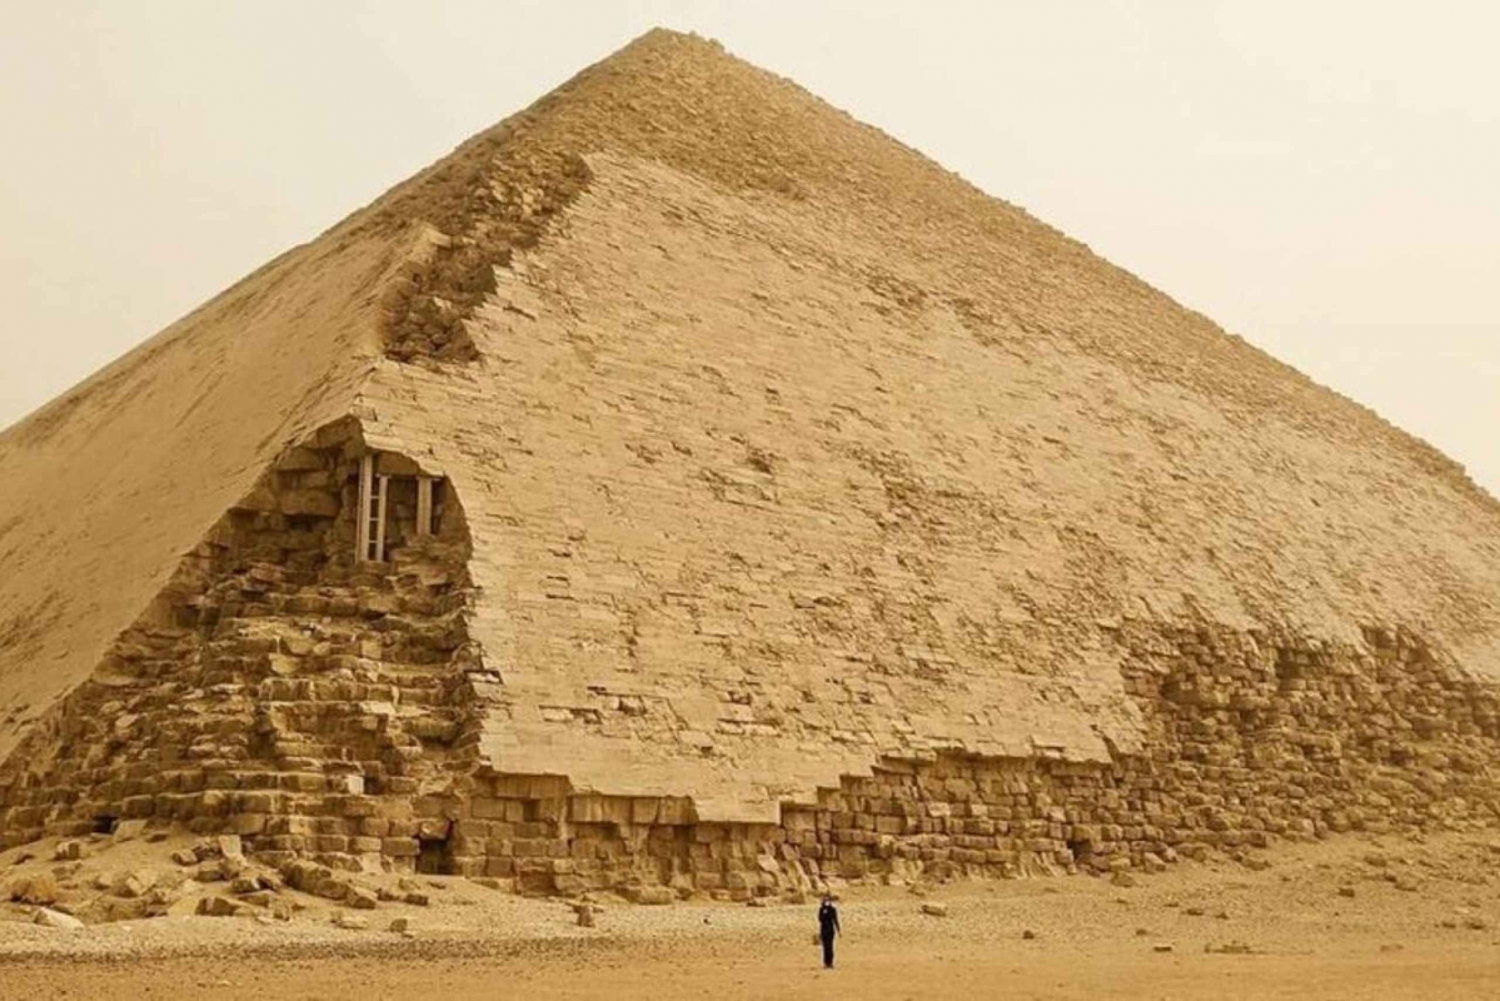 Cairo: Pyramids, Memphis, and City Highlights Private Tour